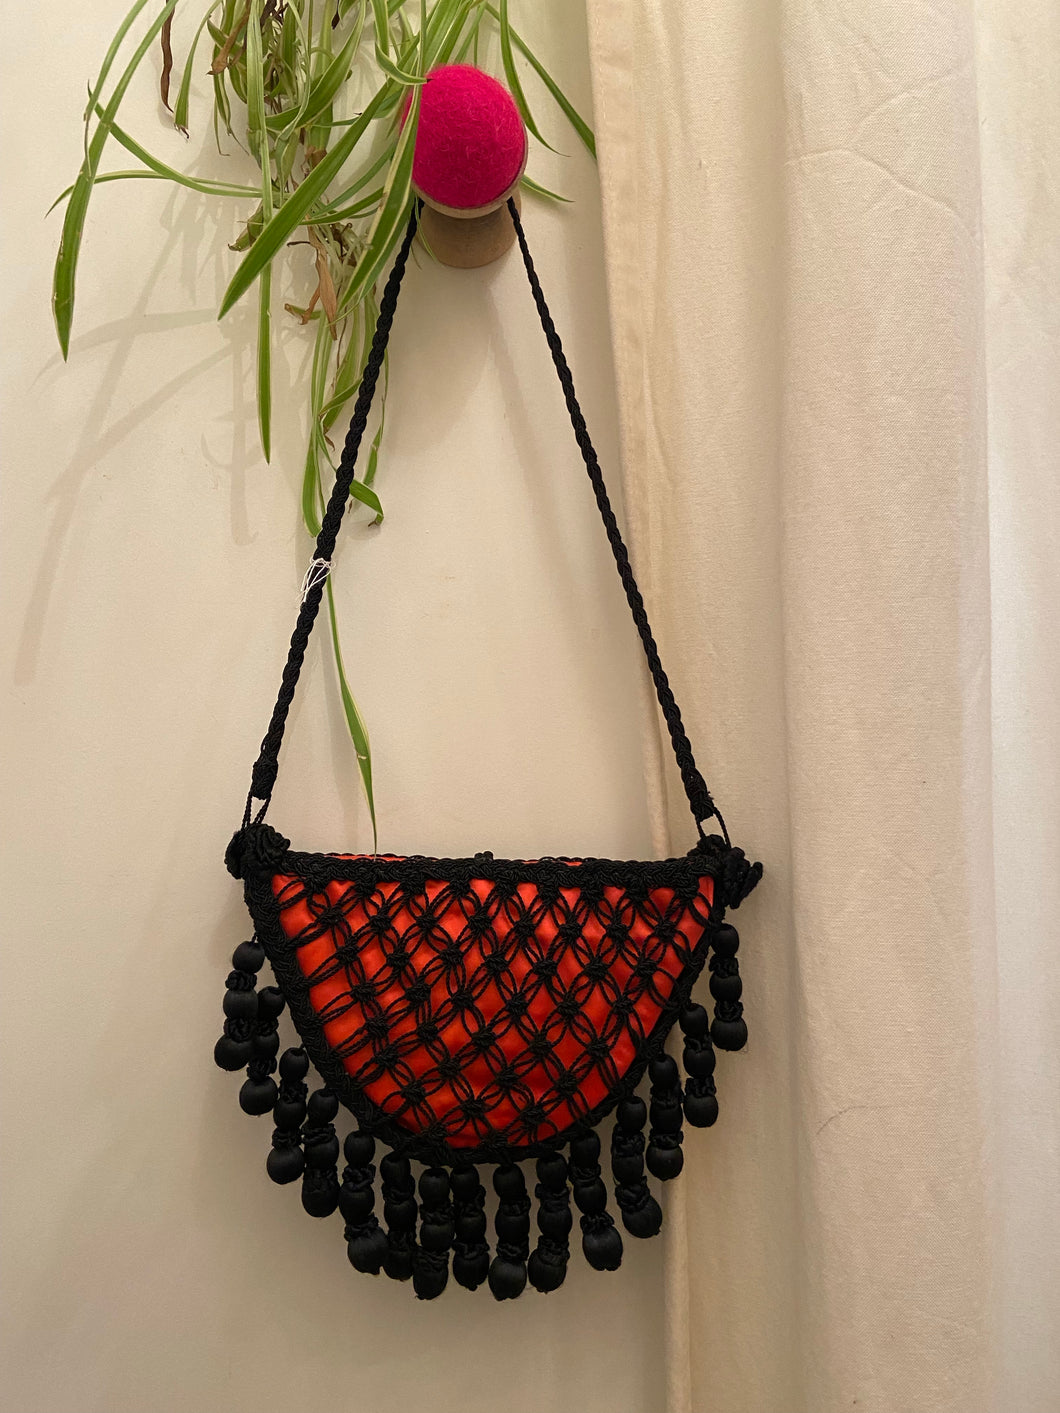 Vintage red and black crocheted pocket bag with tassels